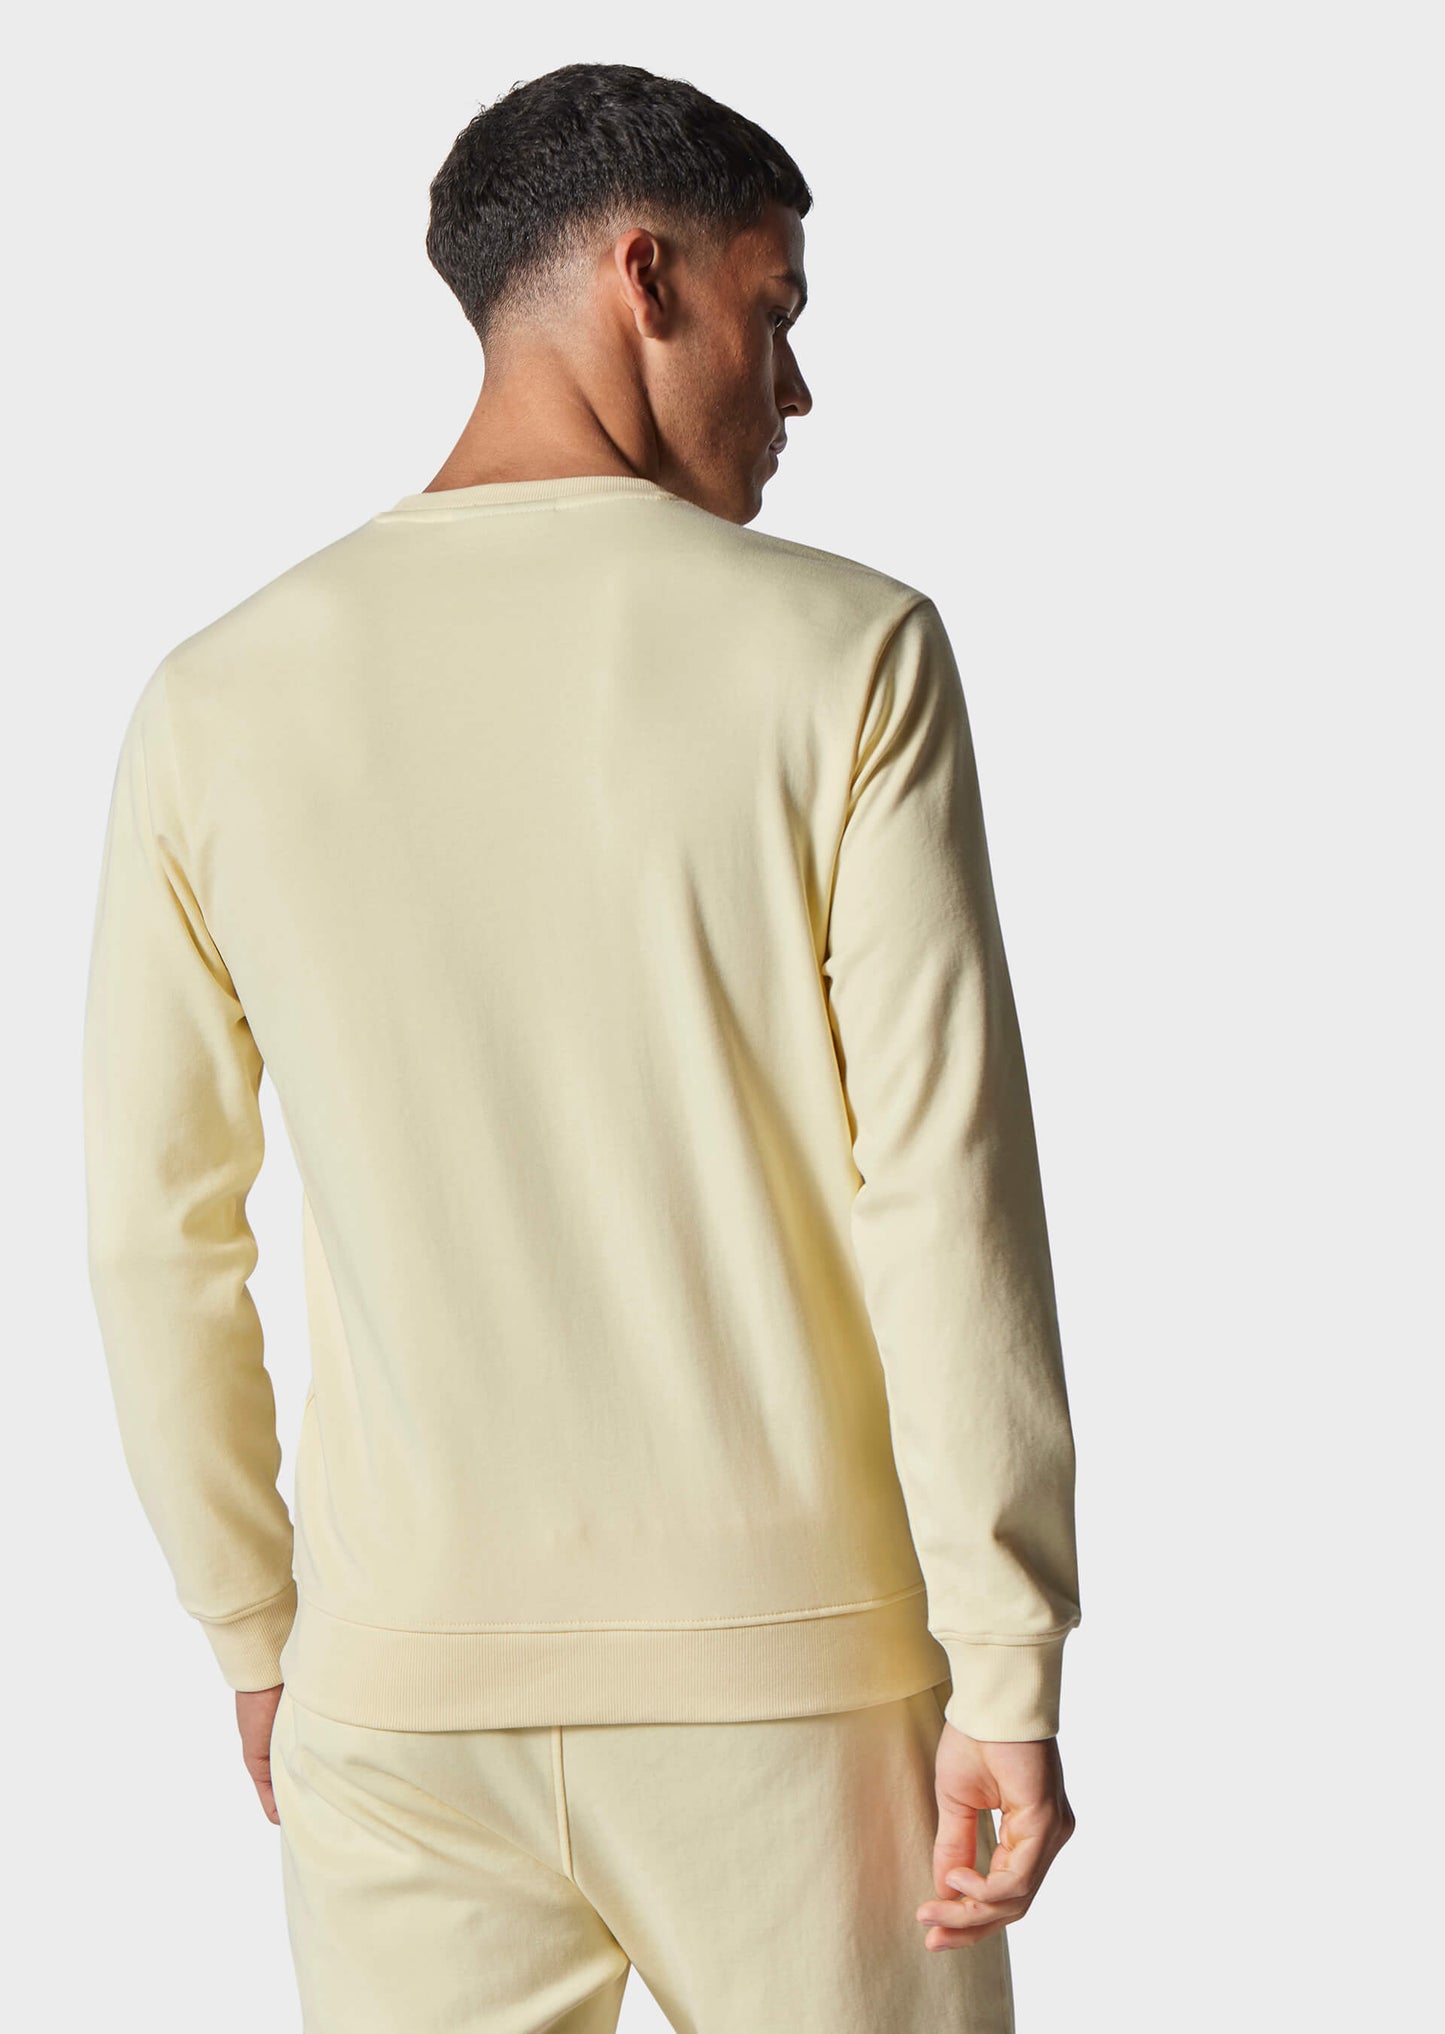 Recinto Soft Yellow Sweatshirt